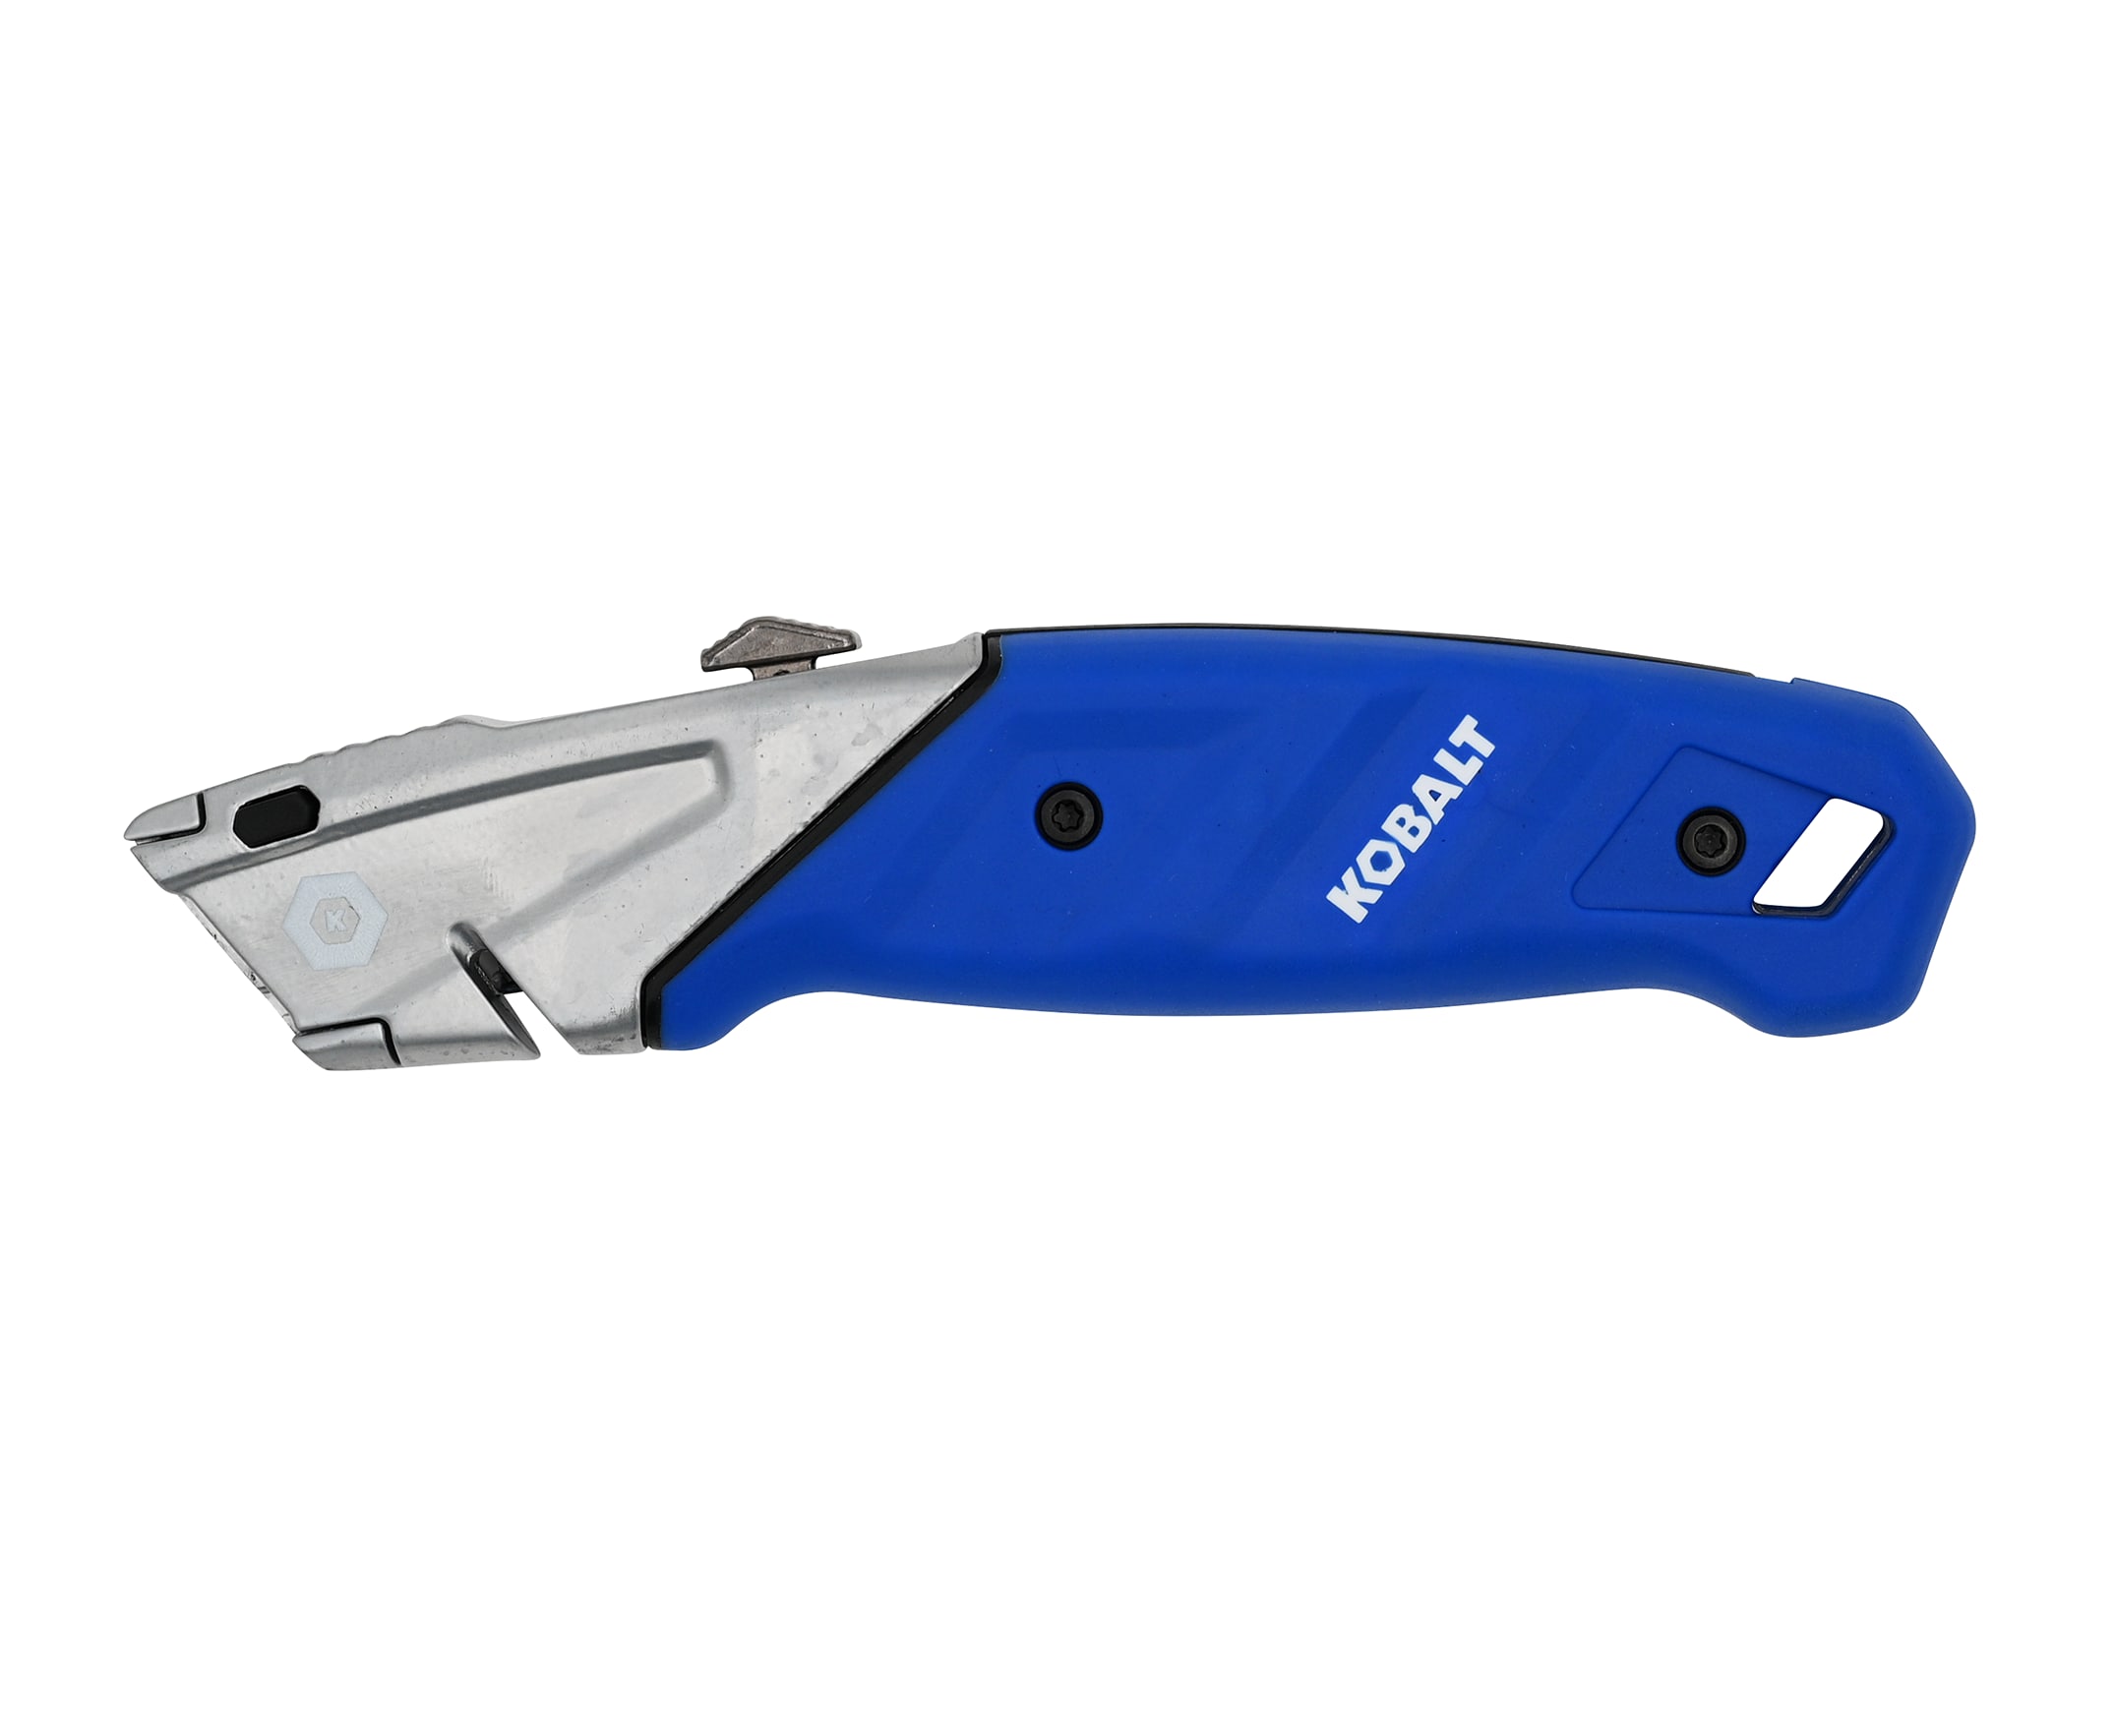  Kobalt 28-Piece Lockback Utility Knife Set : Tools & Home  Improvement